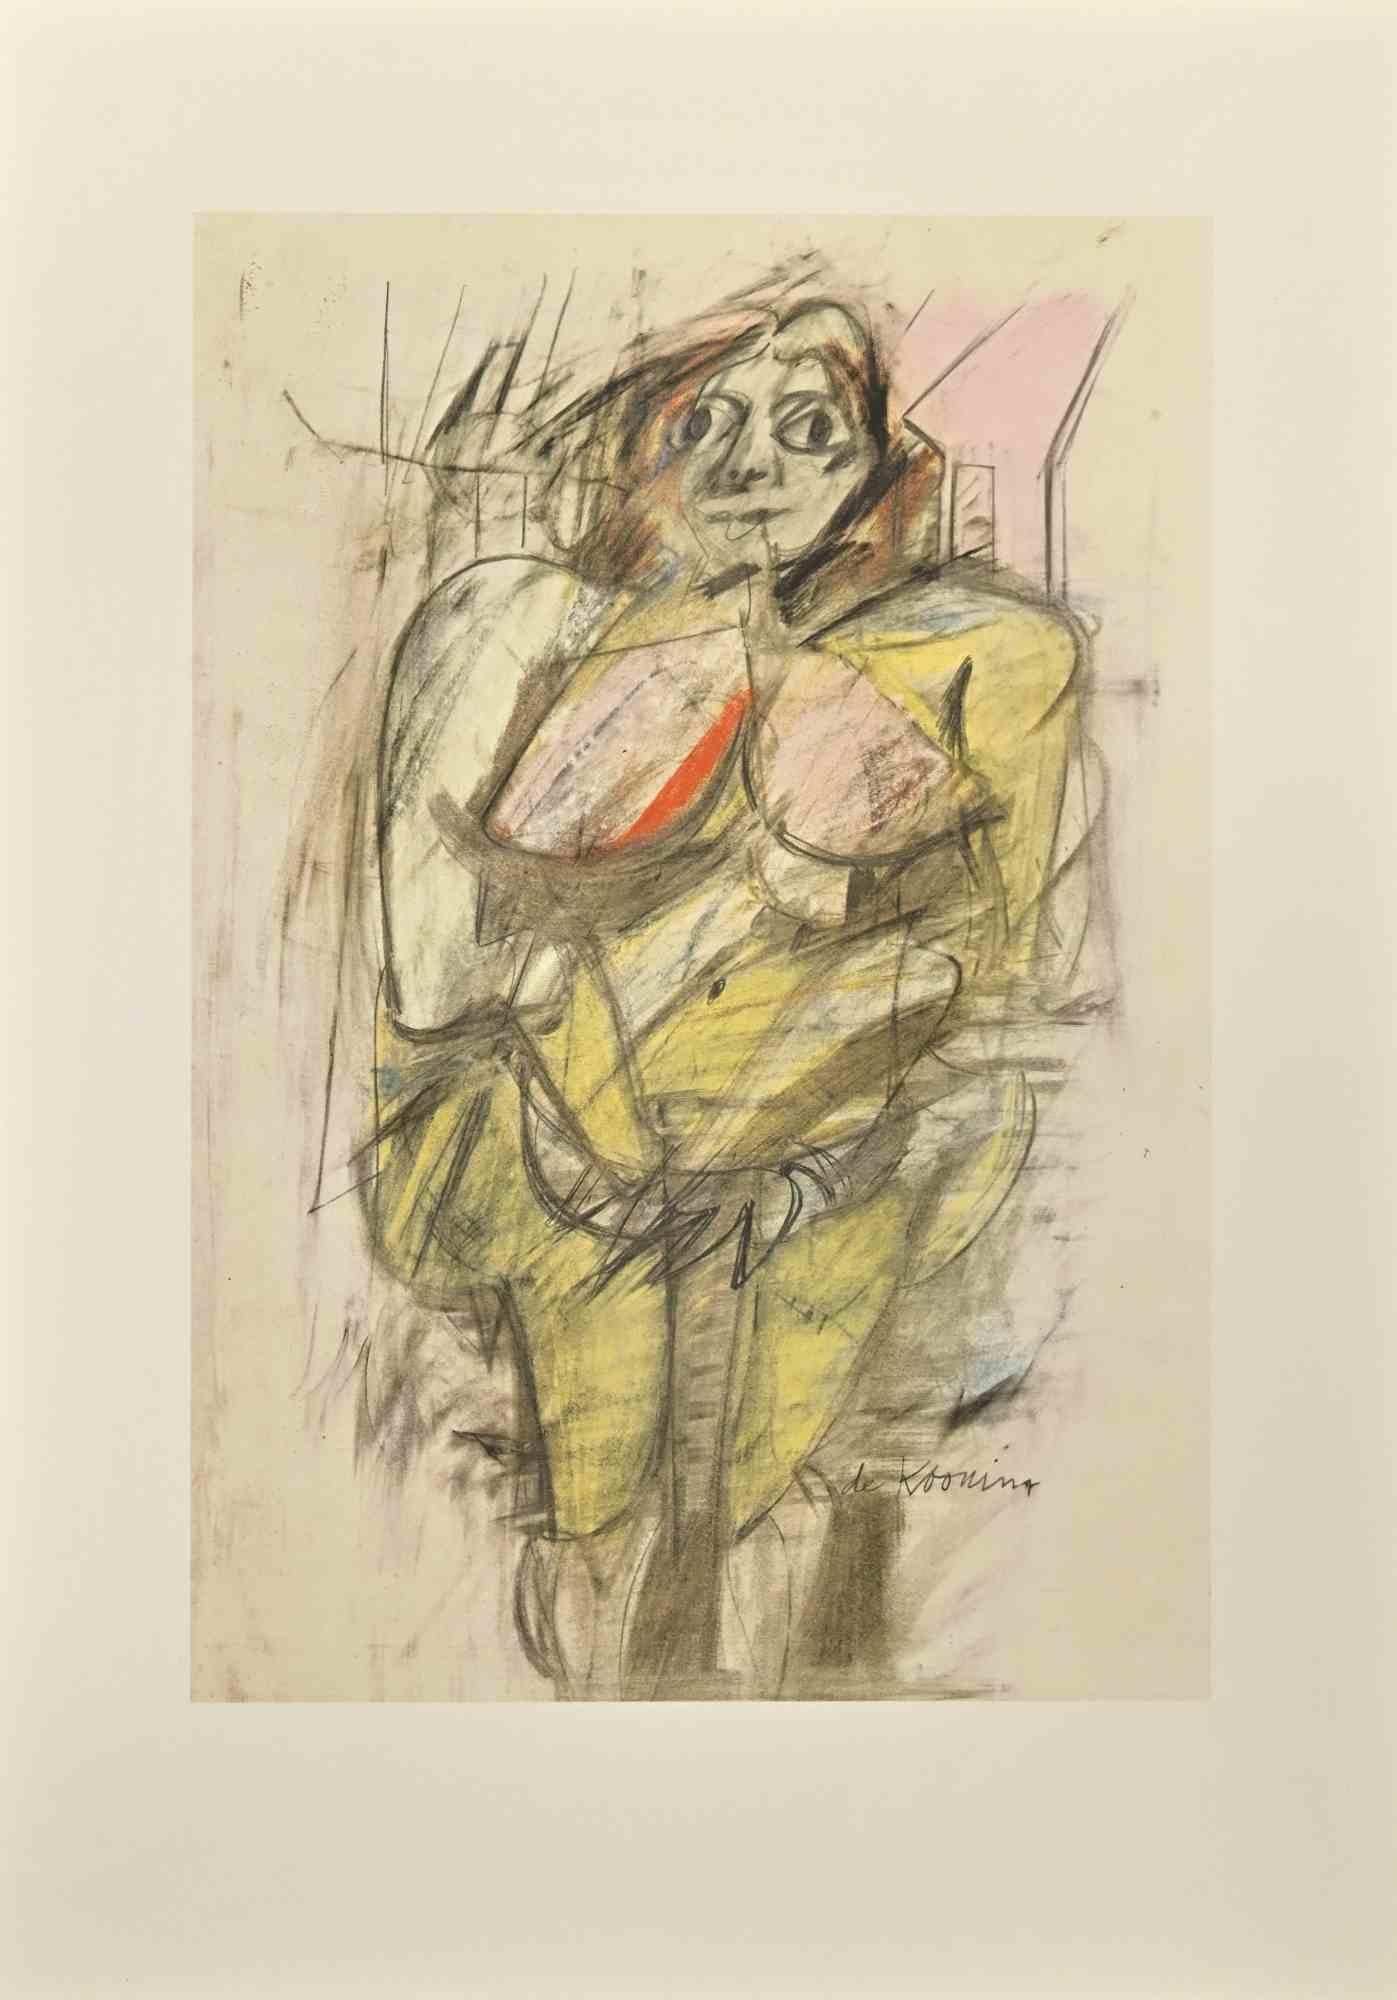 Willem de Kooning Print - Woman - Offset and Lithograph after Willem De Kooning - 1985